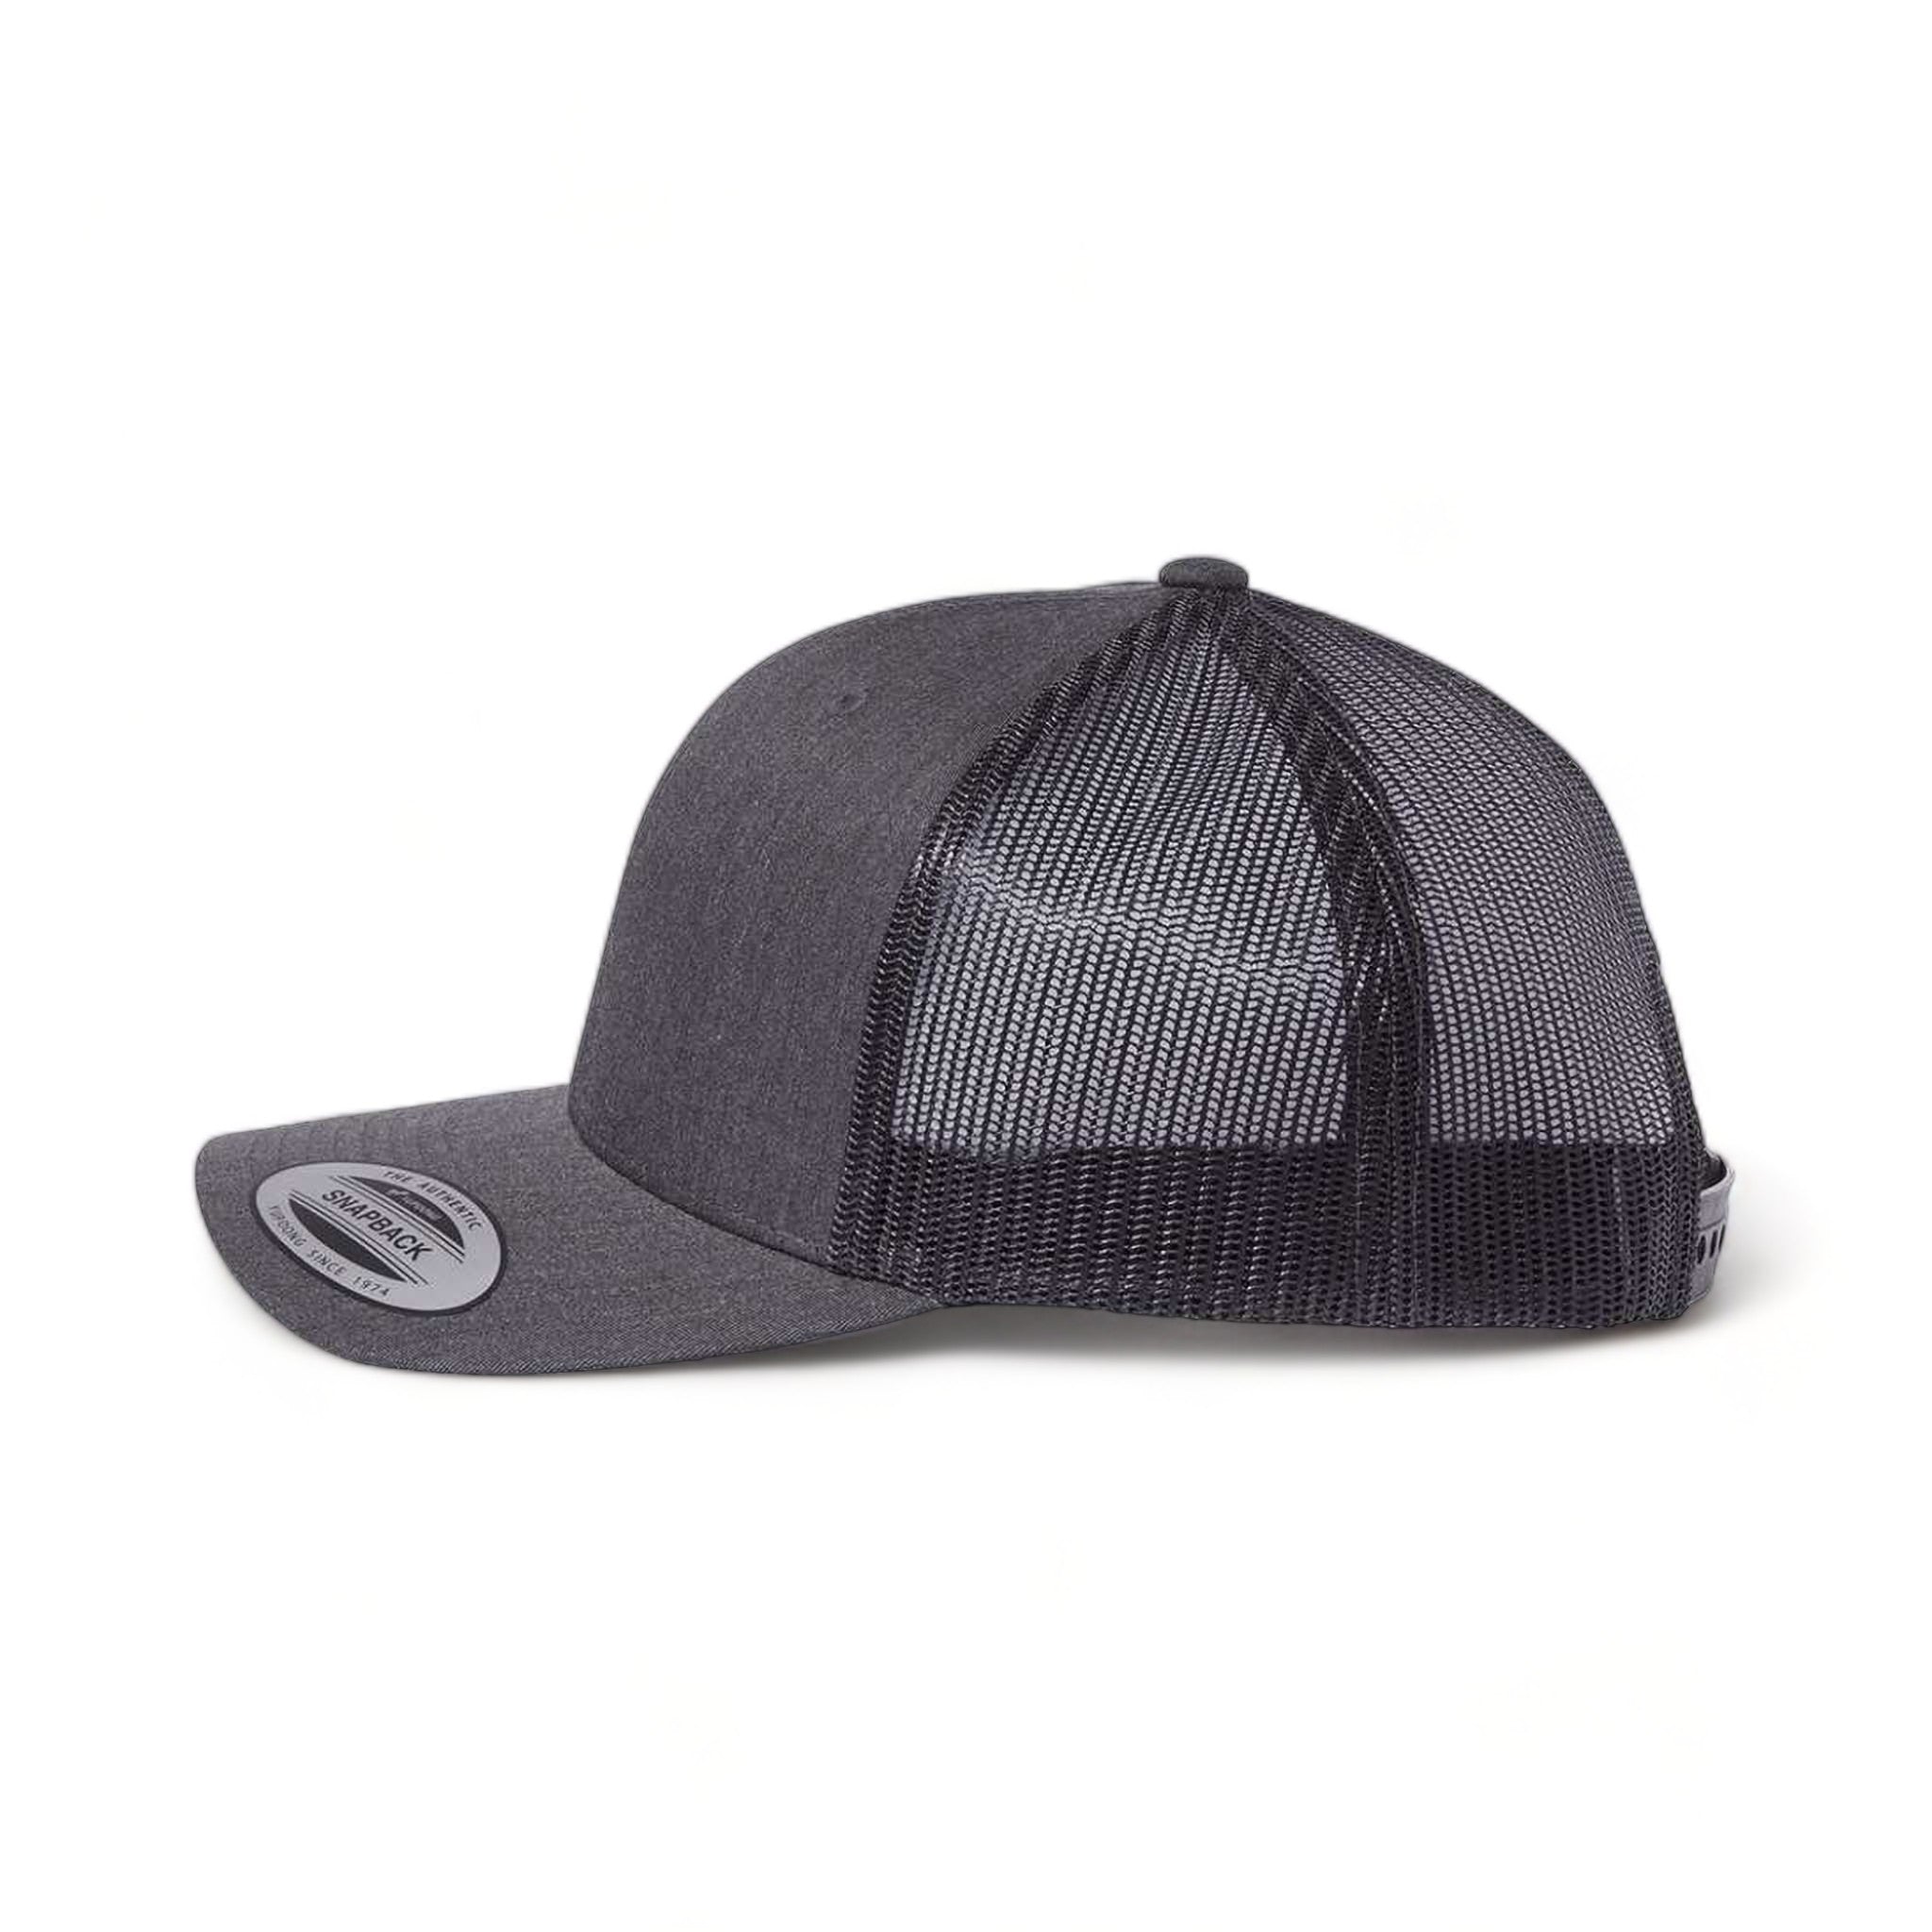 Side view of YP Classics 6606 custom hat in dark heather grey